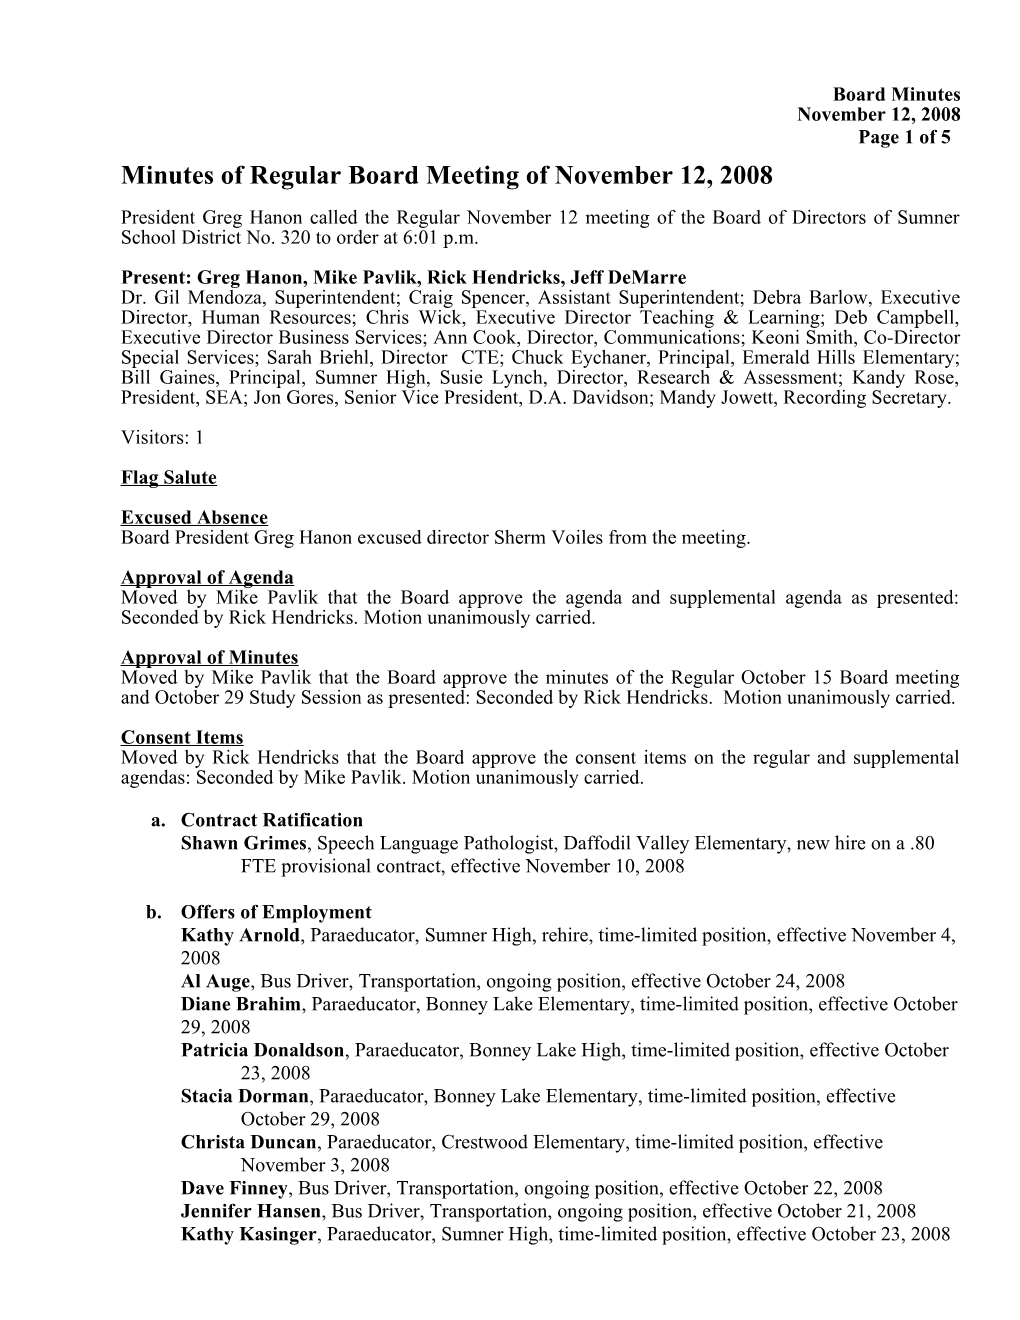 Minutes of Regular Board Meeting of November 12, 2008